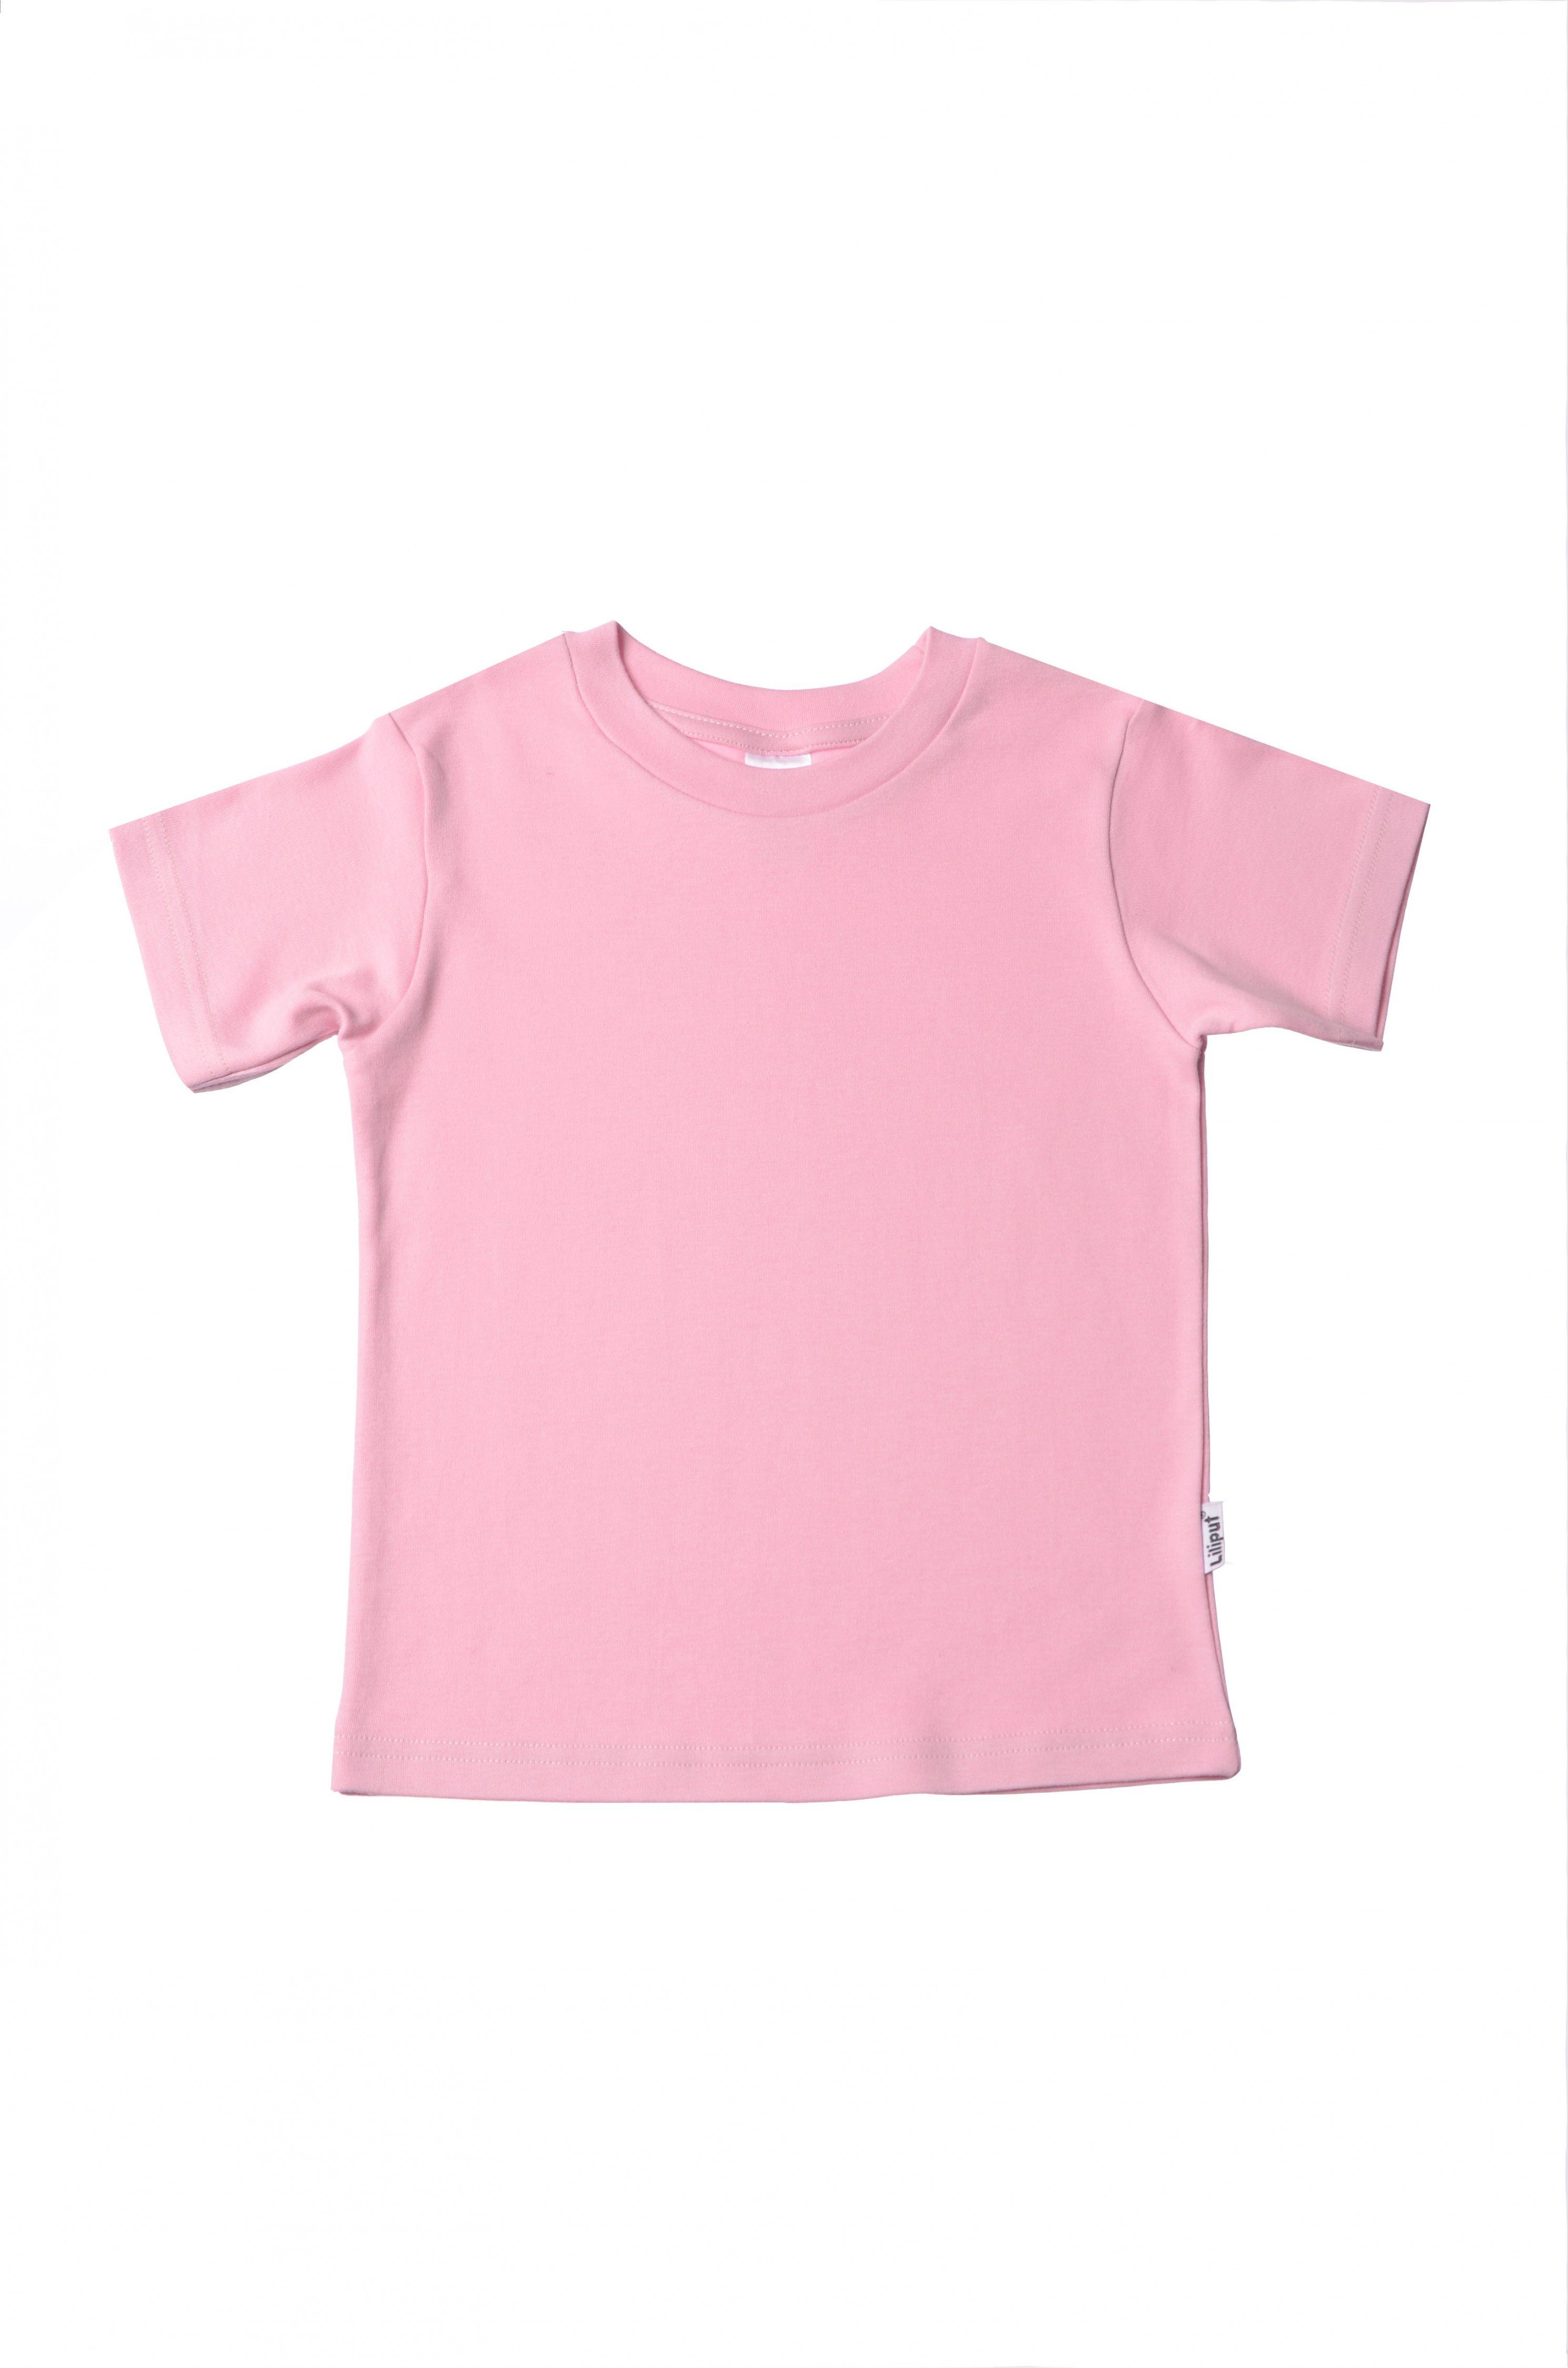 T-Shirt in Design rosa Liliput niedlichem